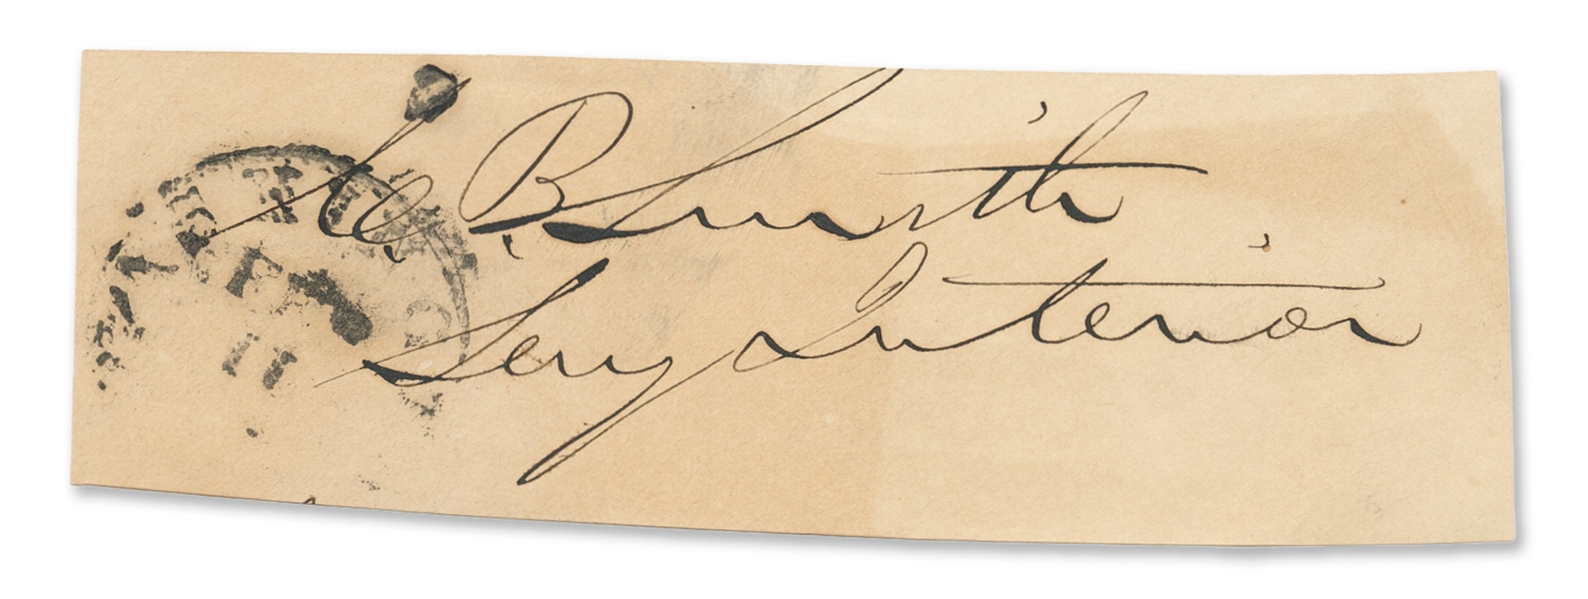 Caleb Smith Signature -- Abraham Lincolns Secretary of the Interior